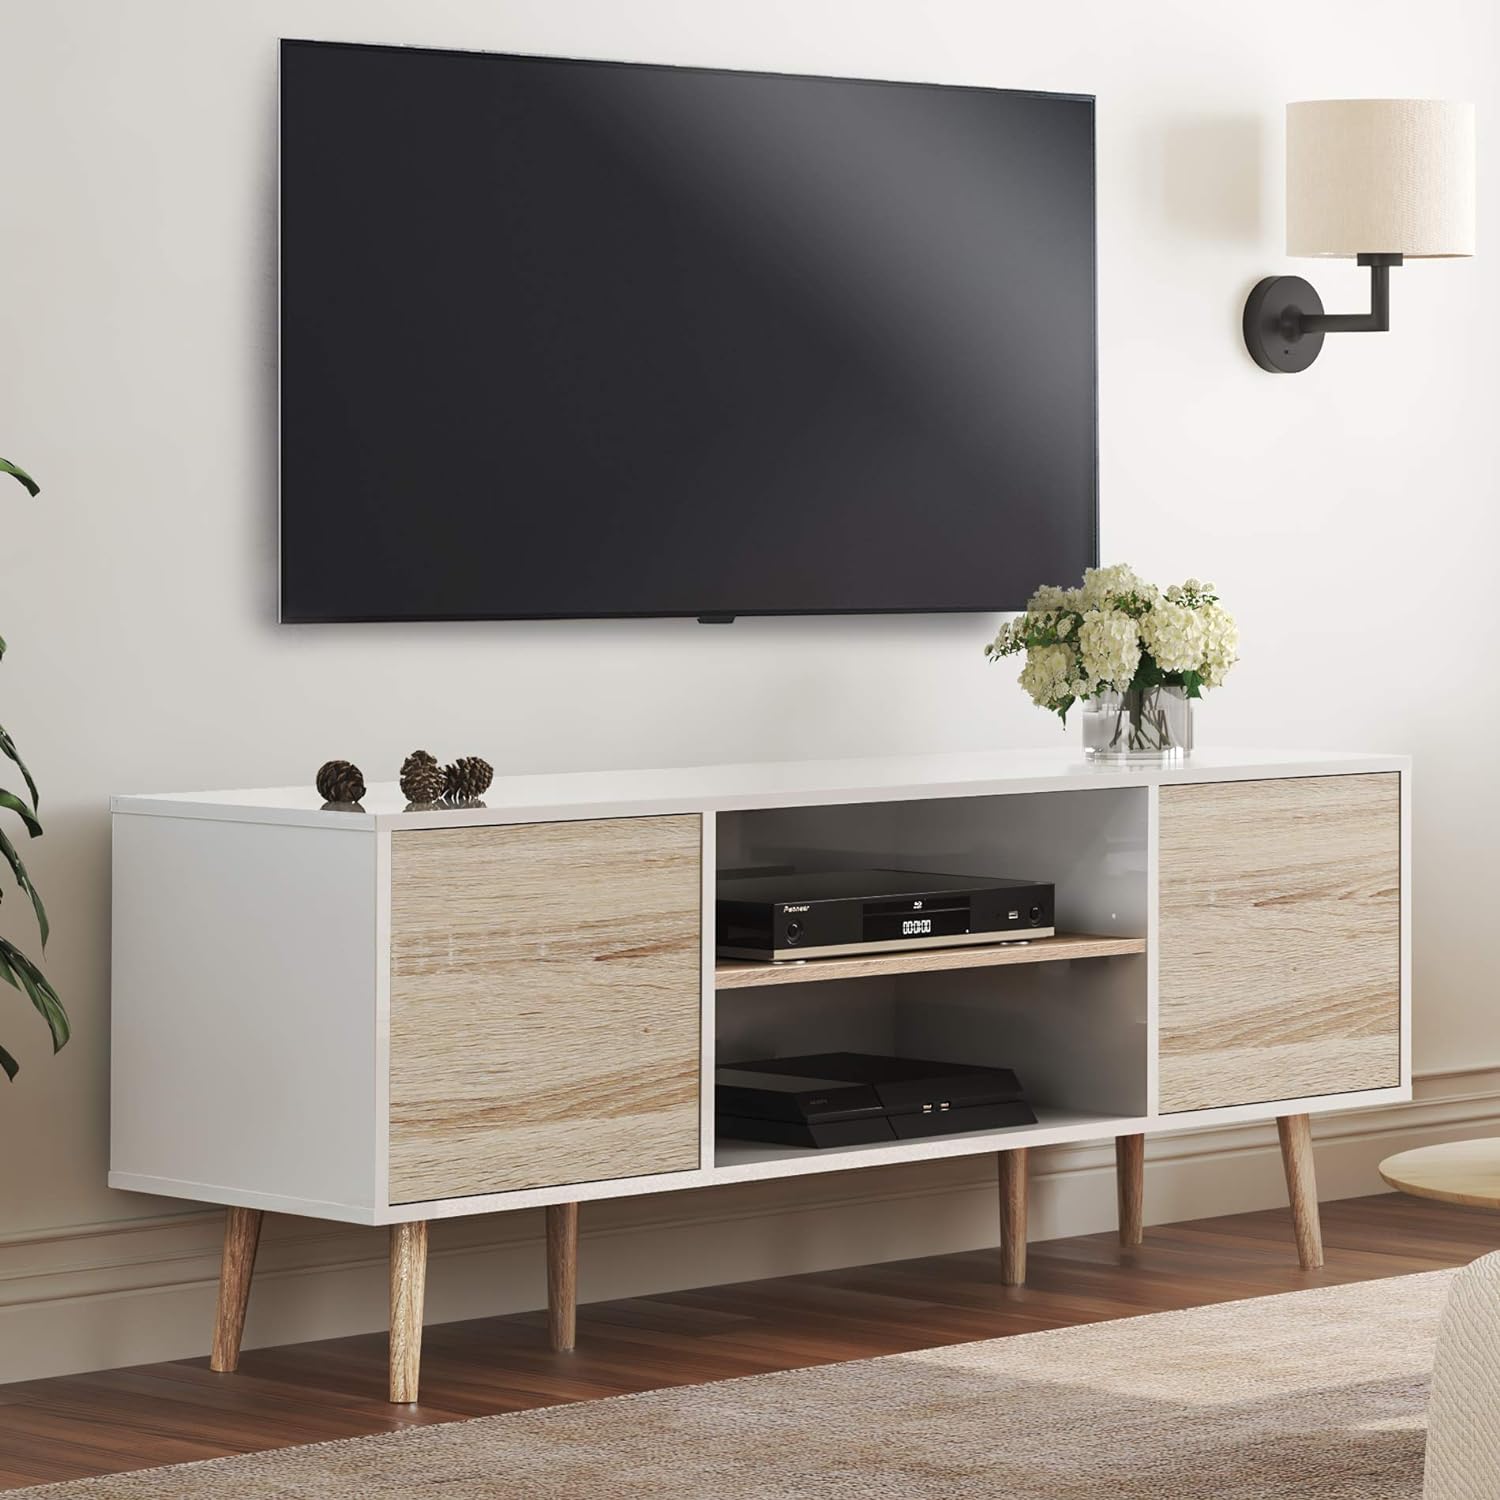 Modern TV Cabinets With Sleek Designs